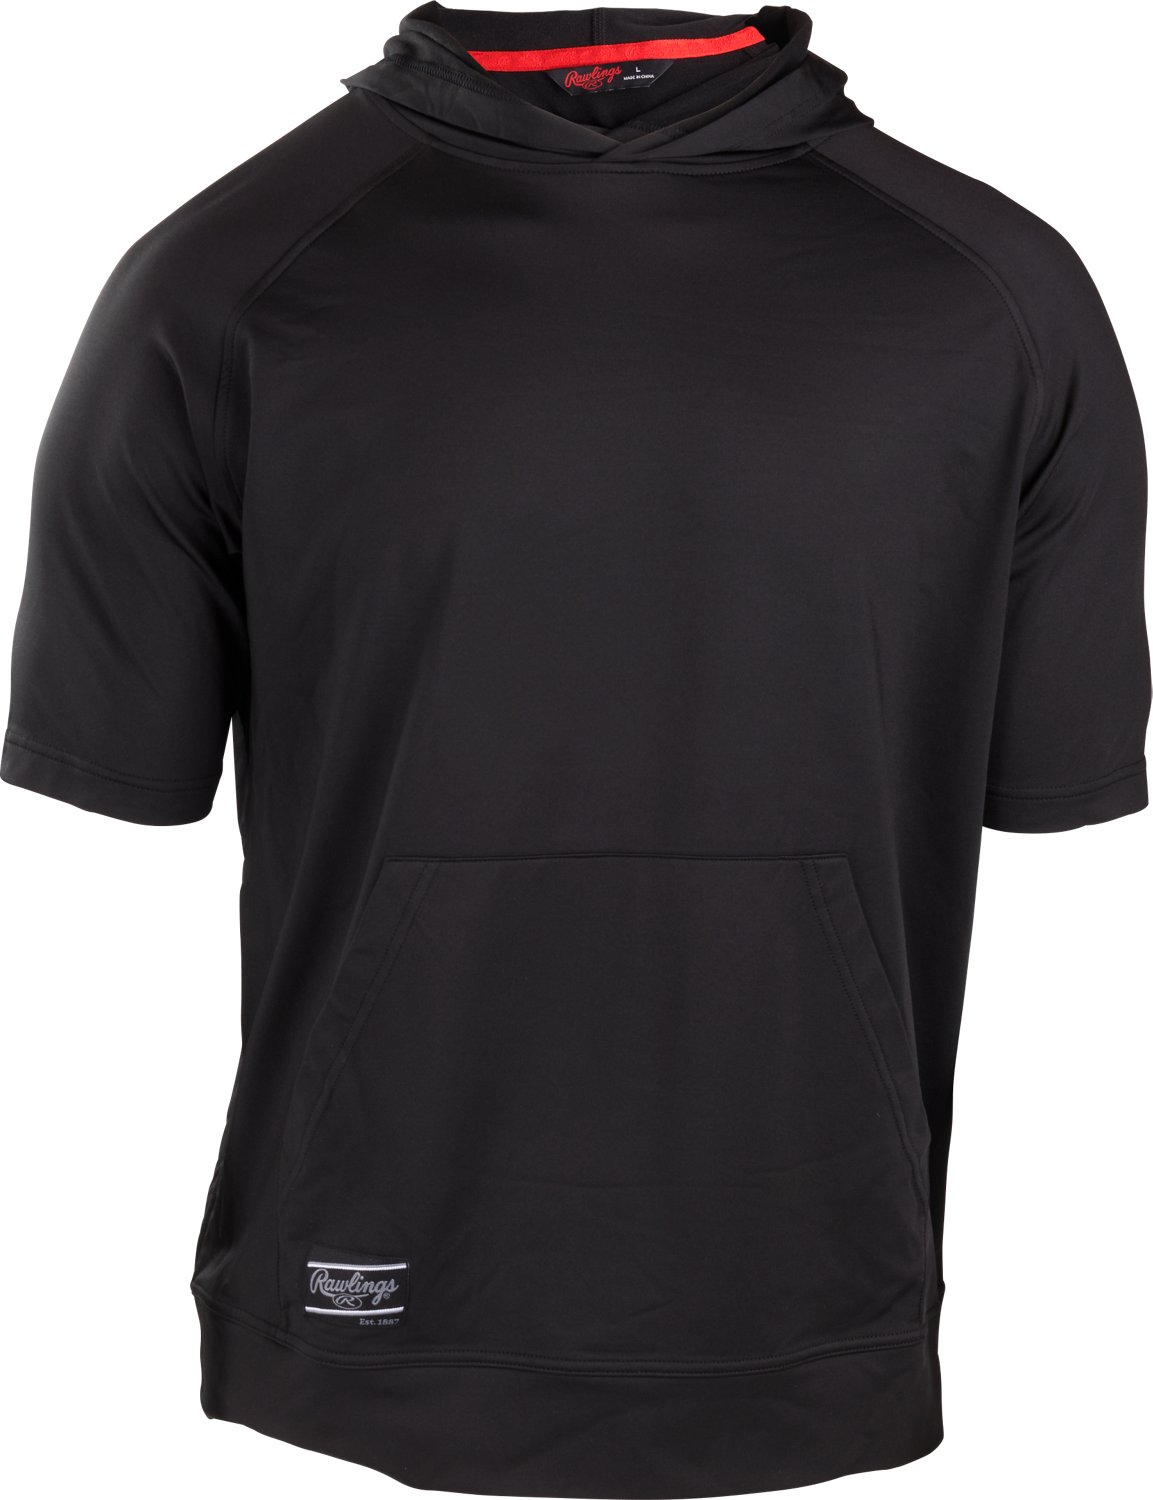 Rawlings Mens Hooded Short Sleeve Baseball Sweatshirt